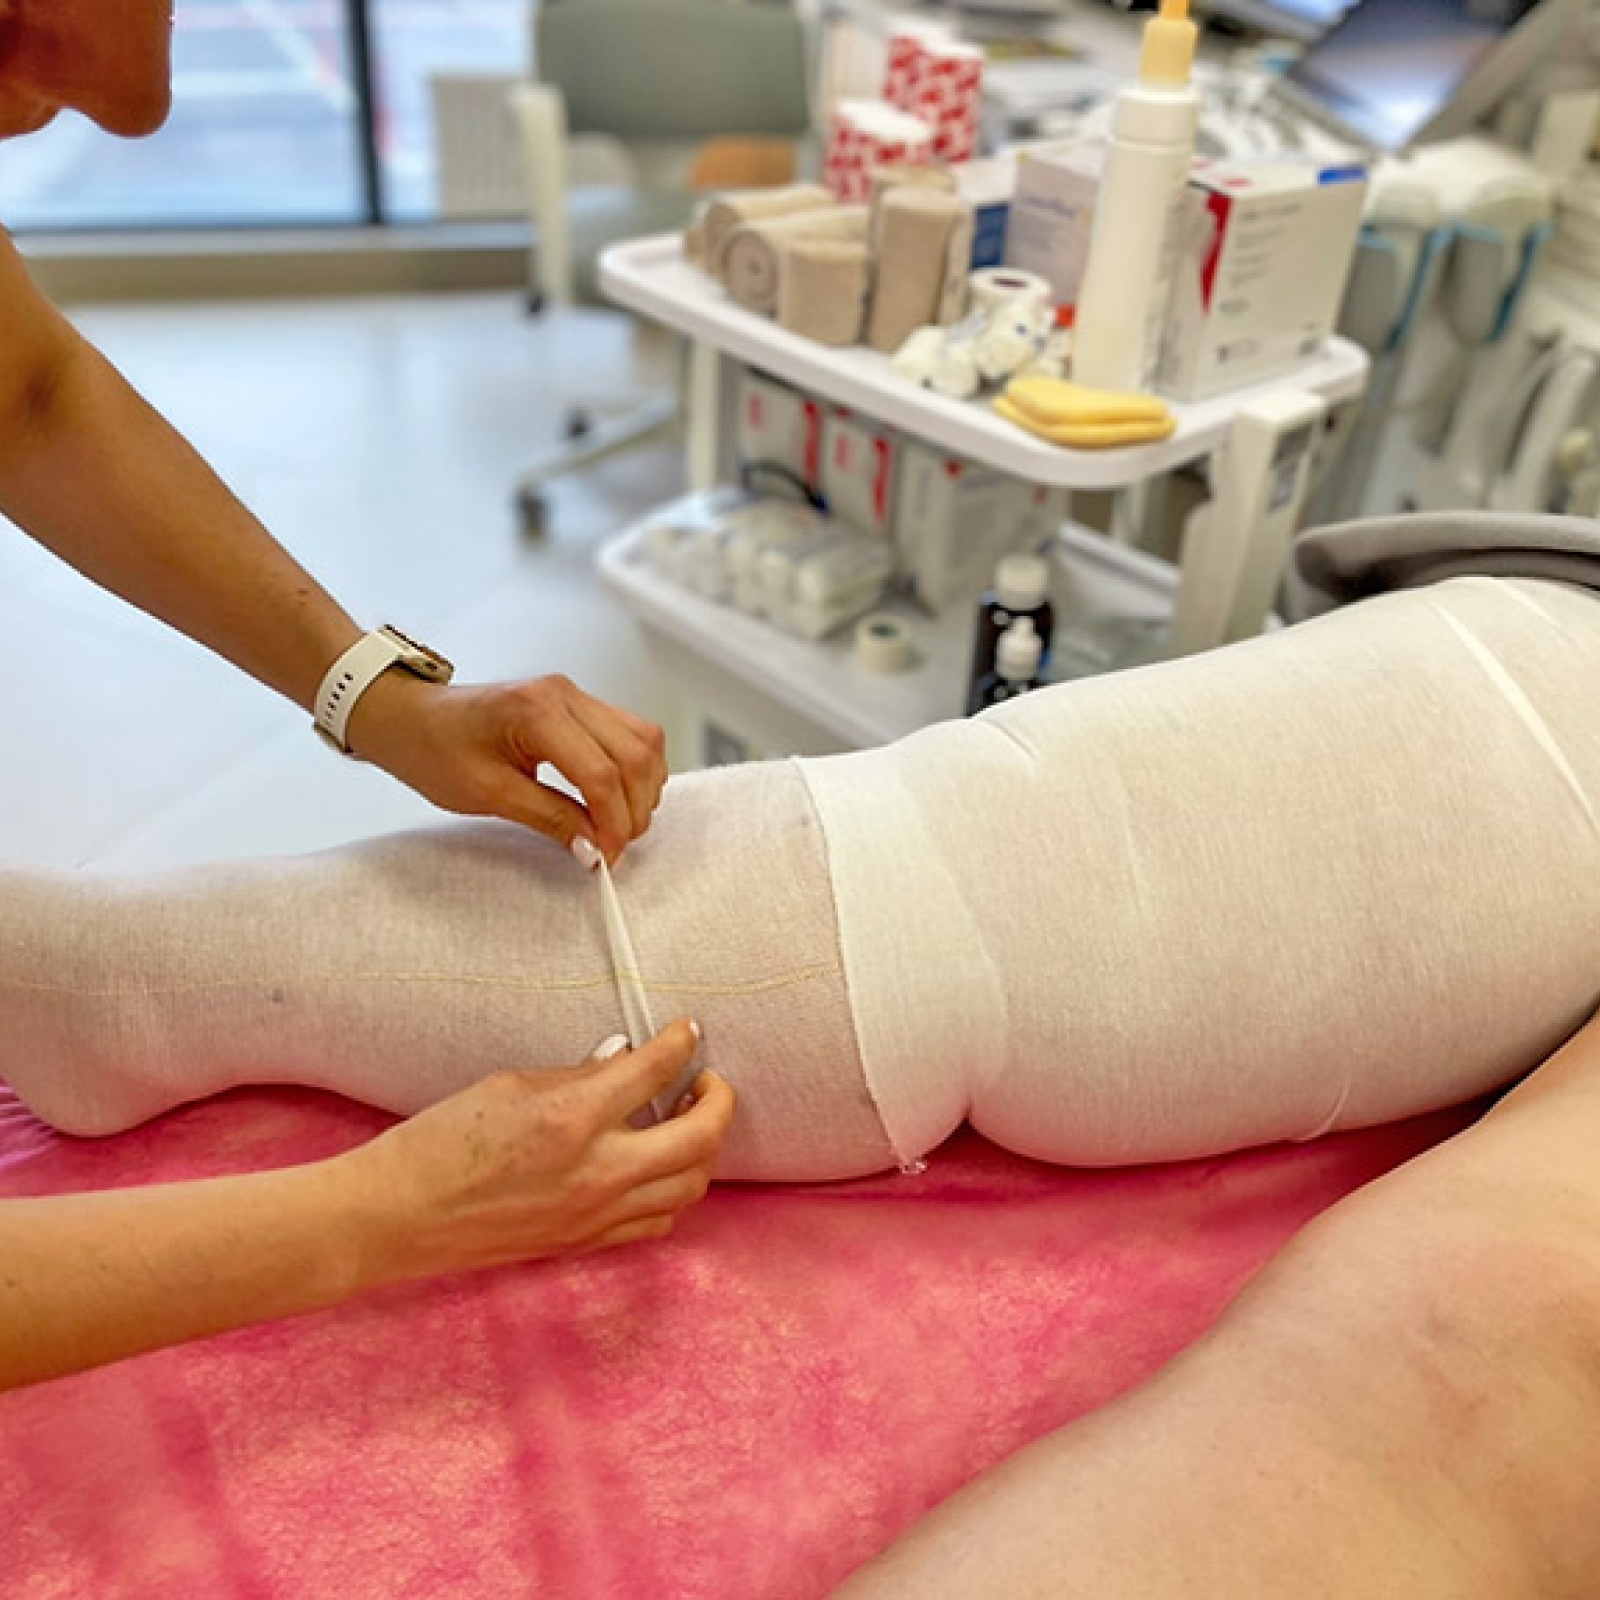 Лечение лимфостаза ног методом КФПТ | Гарнатия результата через 20 дней